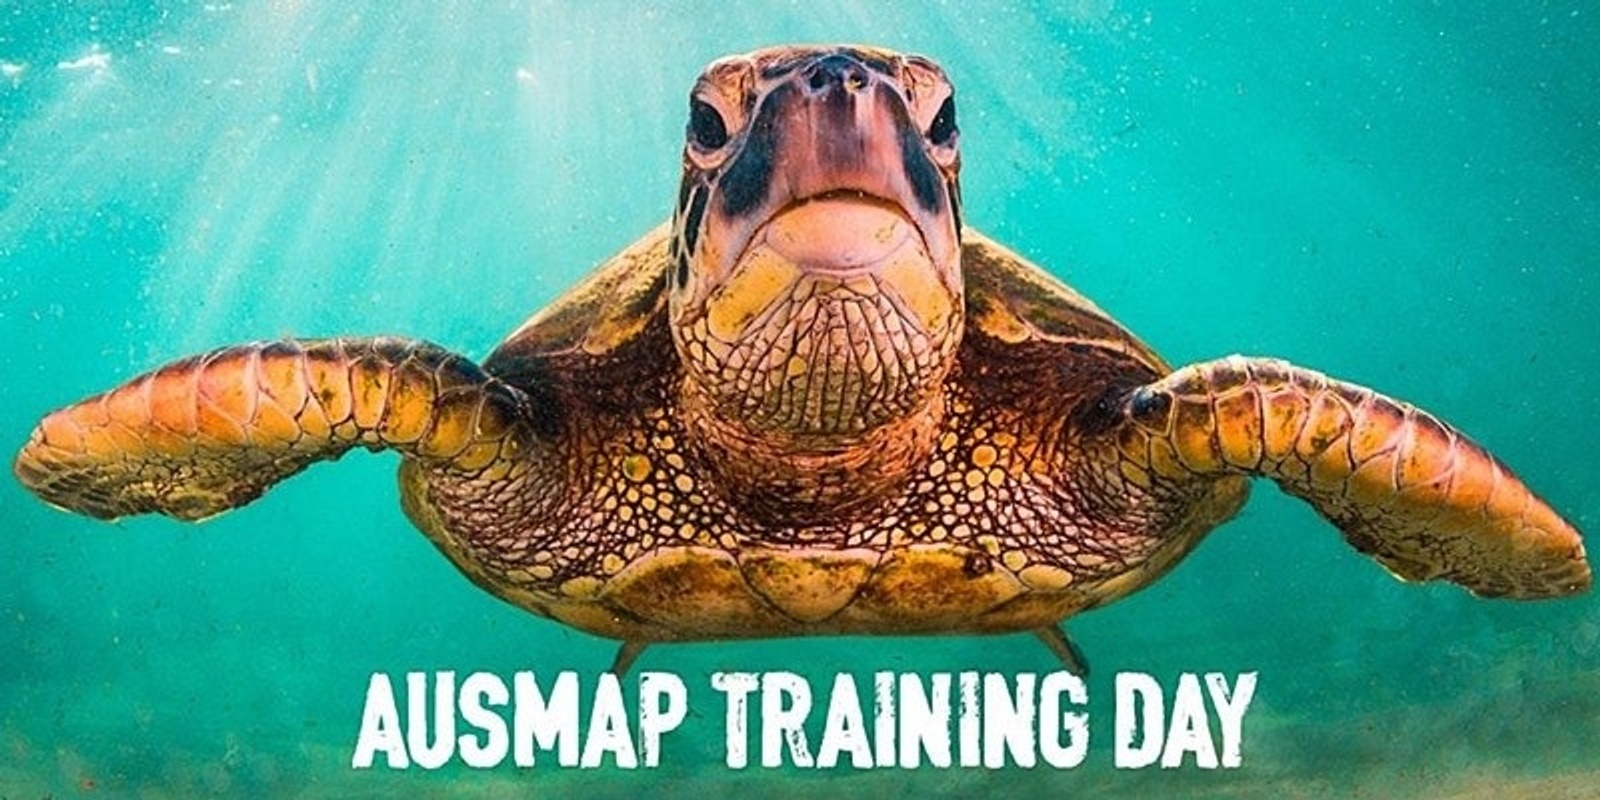 AUSMAP Training Day (Chipping Norton Lakes, NSW)